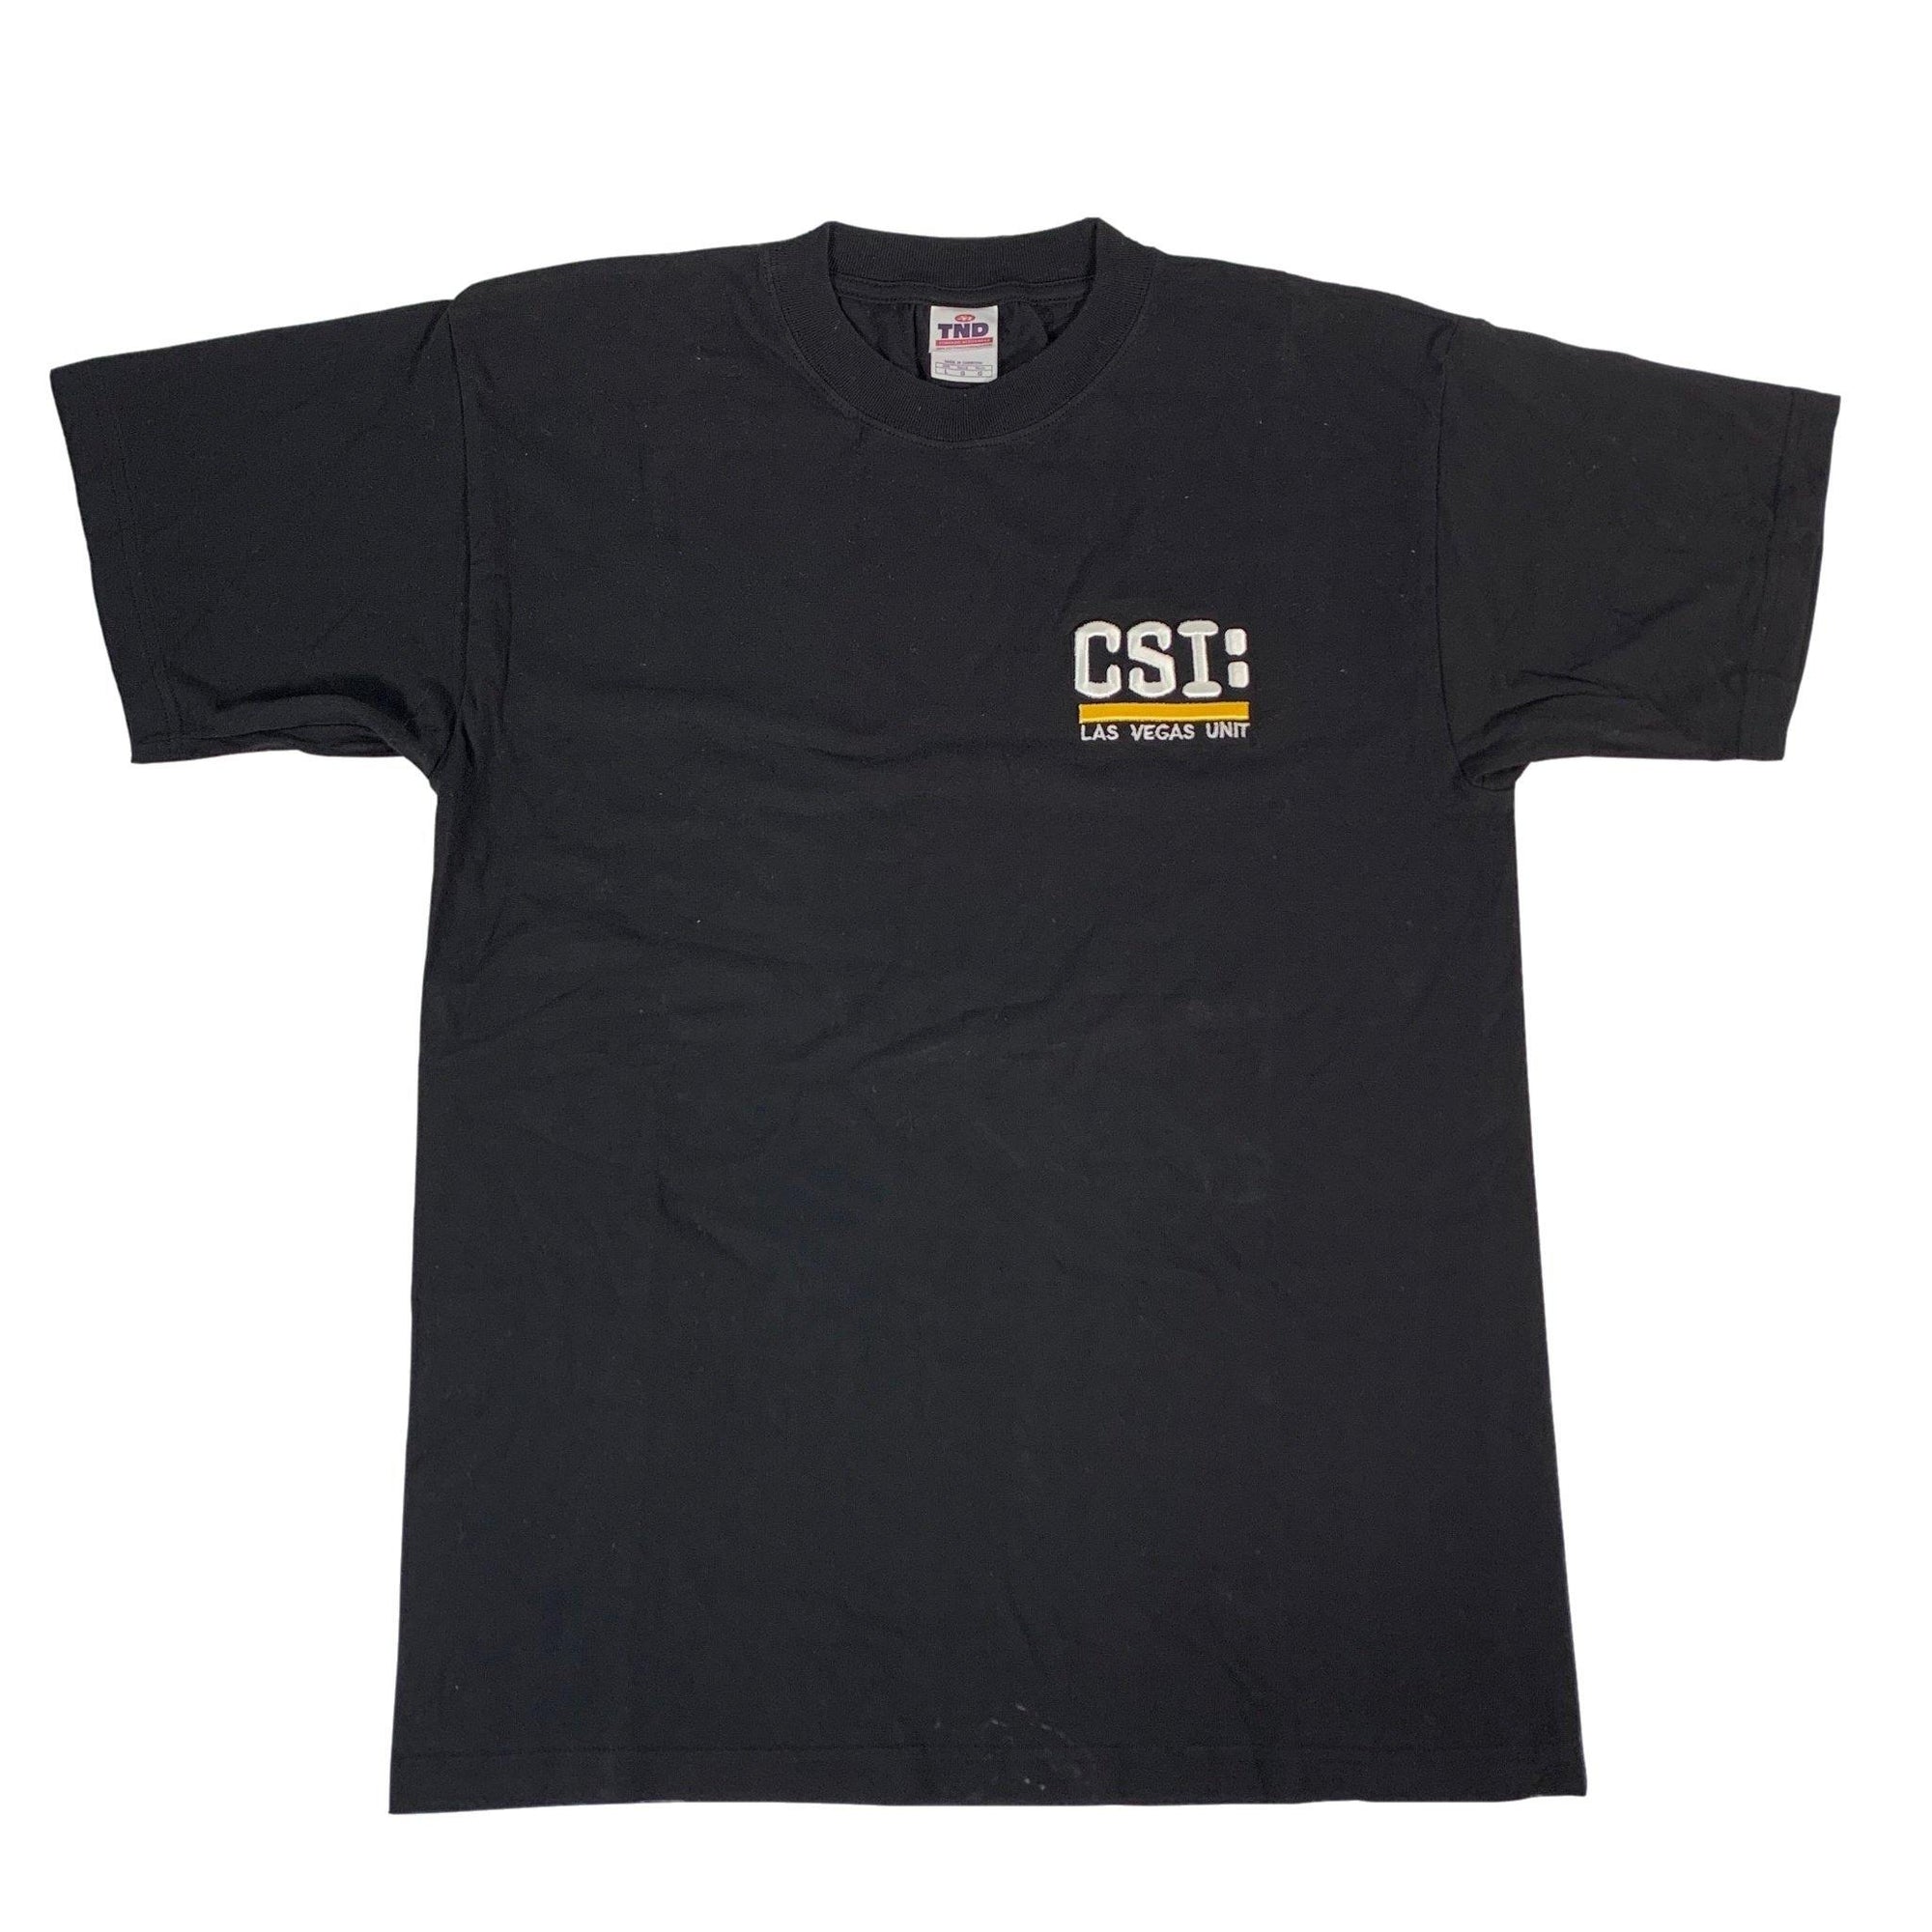 Vintage CSI "Las Vegas" T-Shirt - jointcustodydc